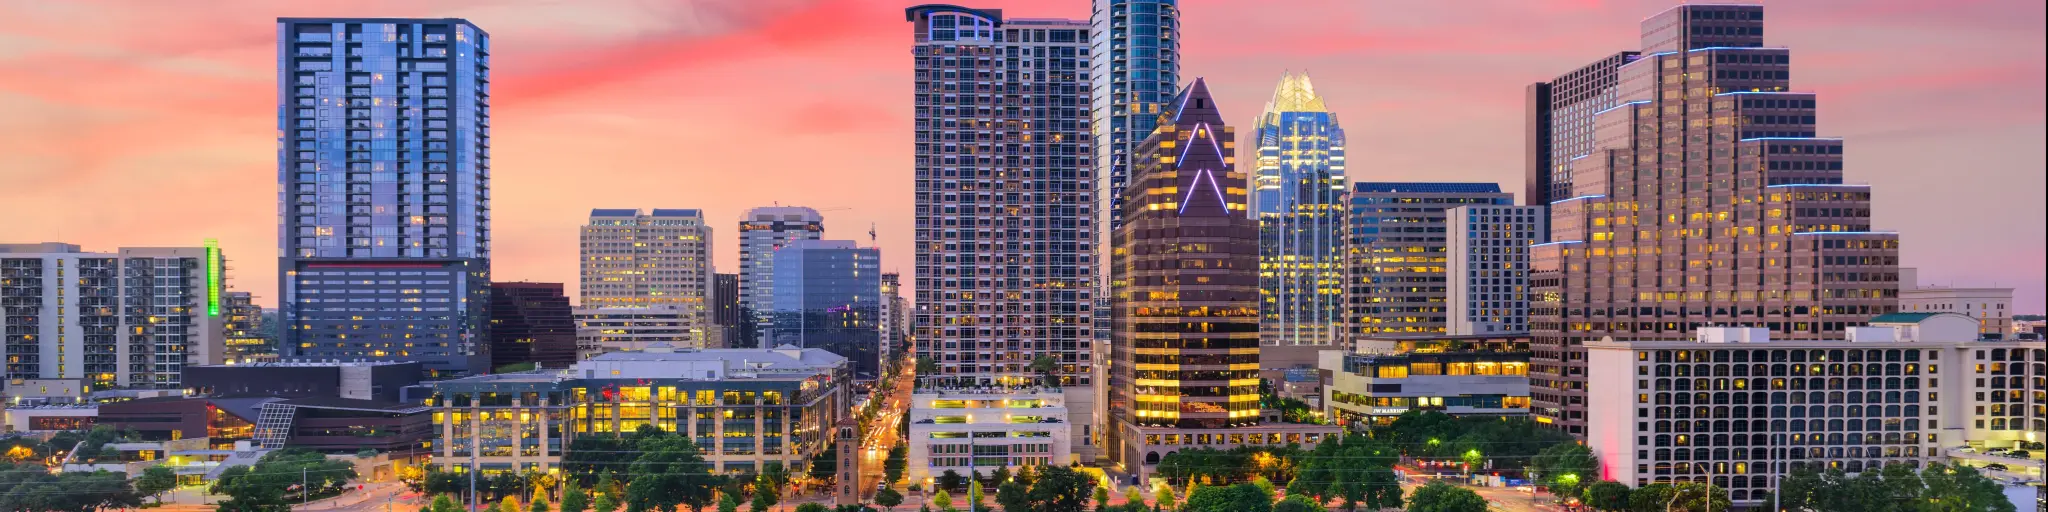 Austin, Texas, USA downtown skyline at night.